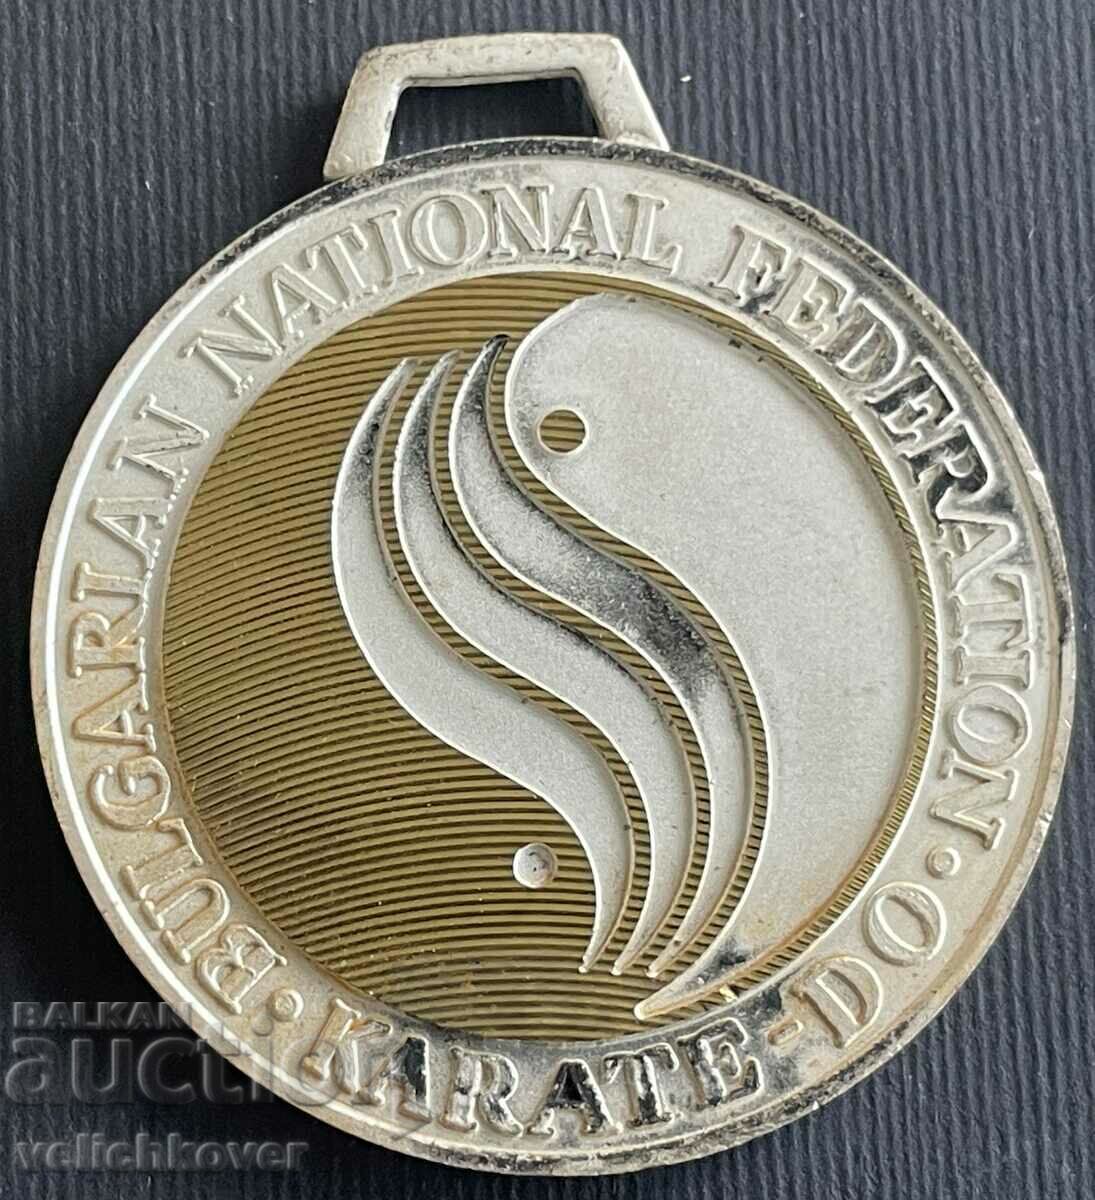 34396 Bulgaria silver medal Bulgarian Karate Federation 97